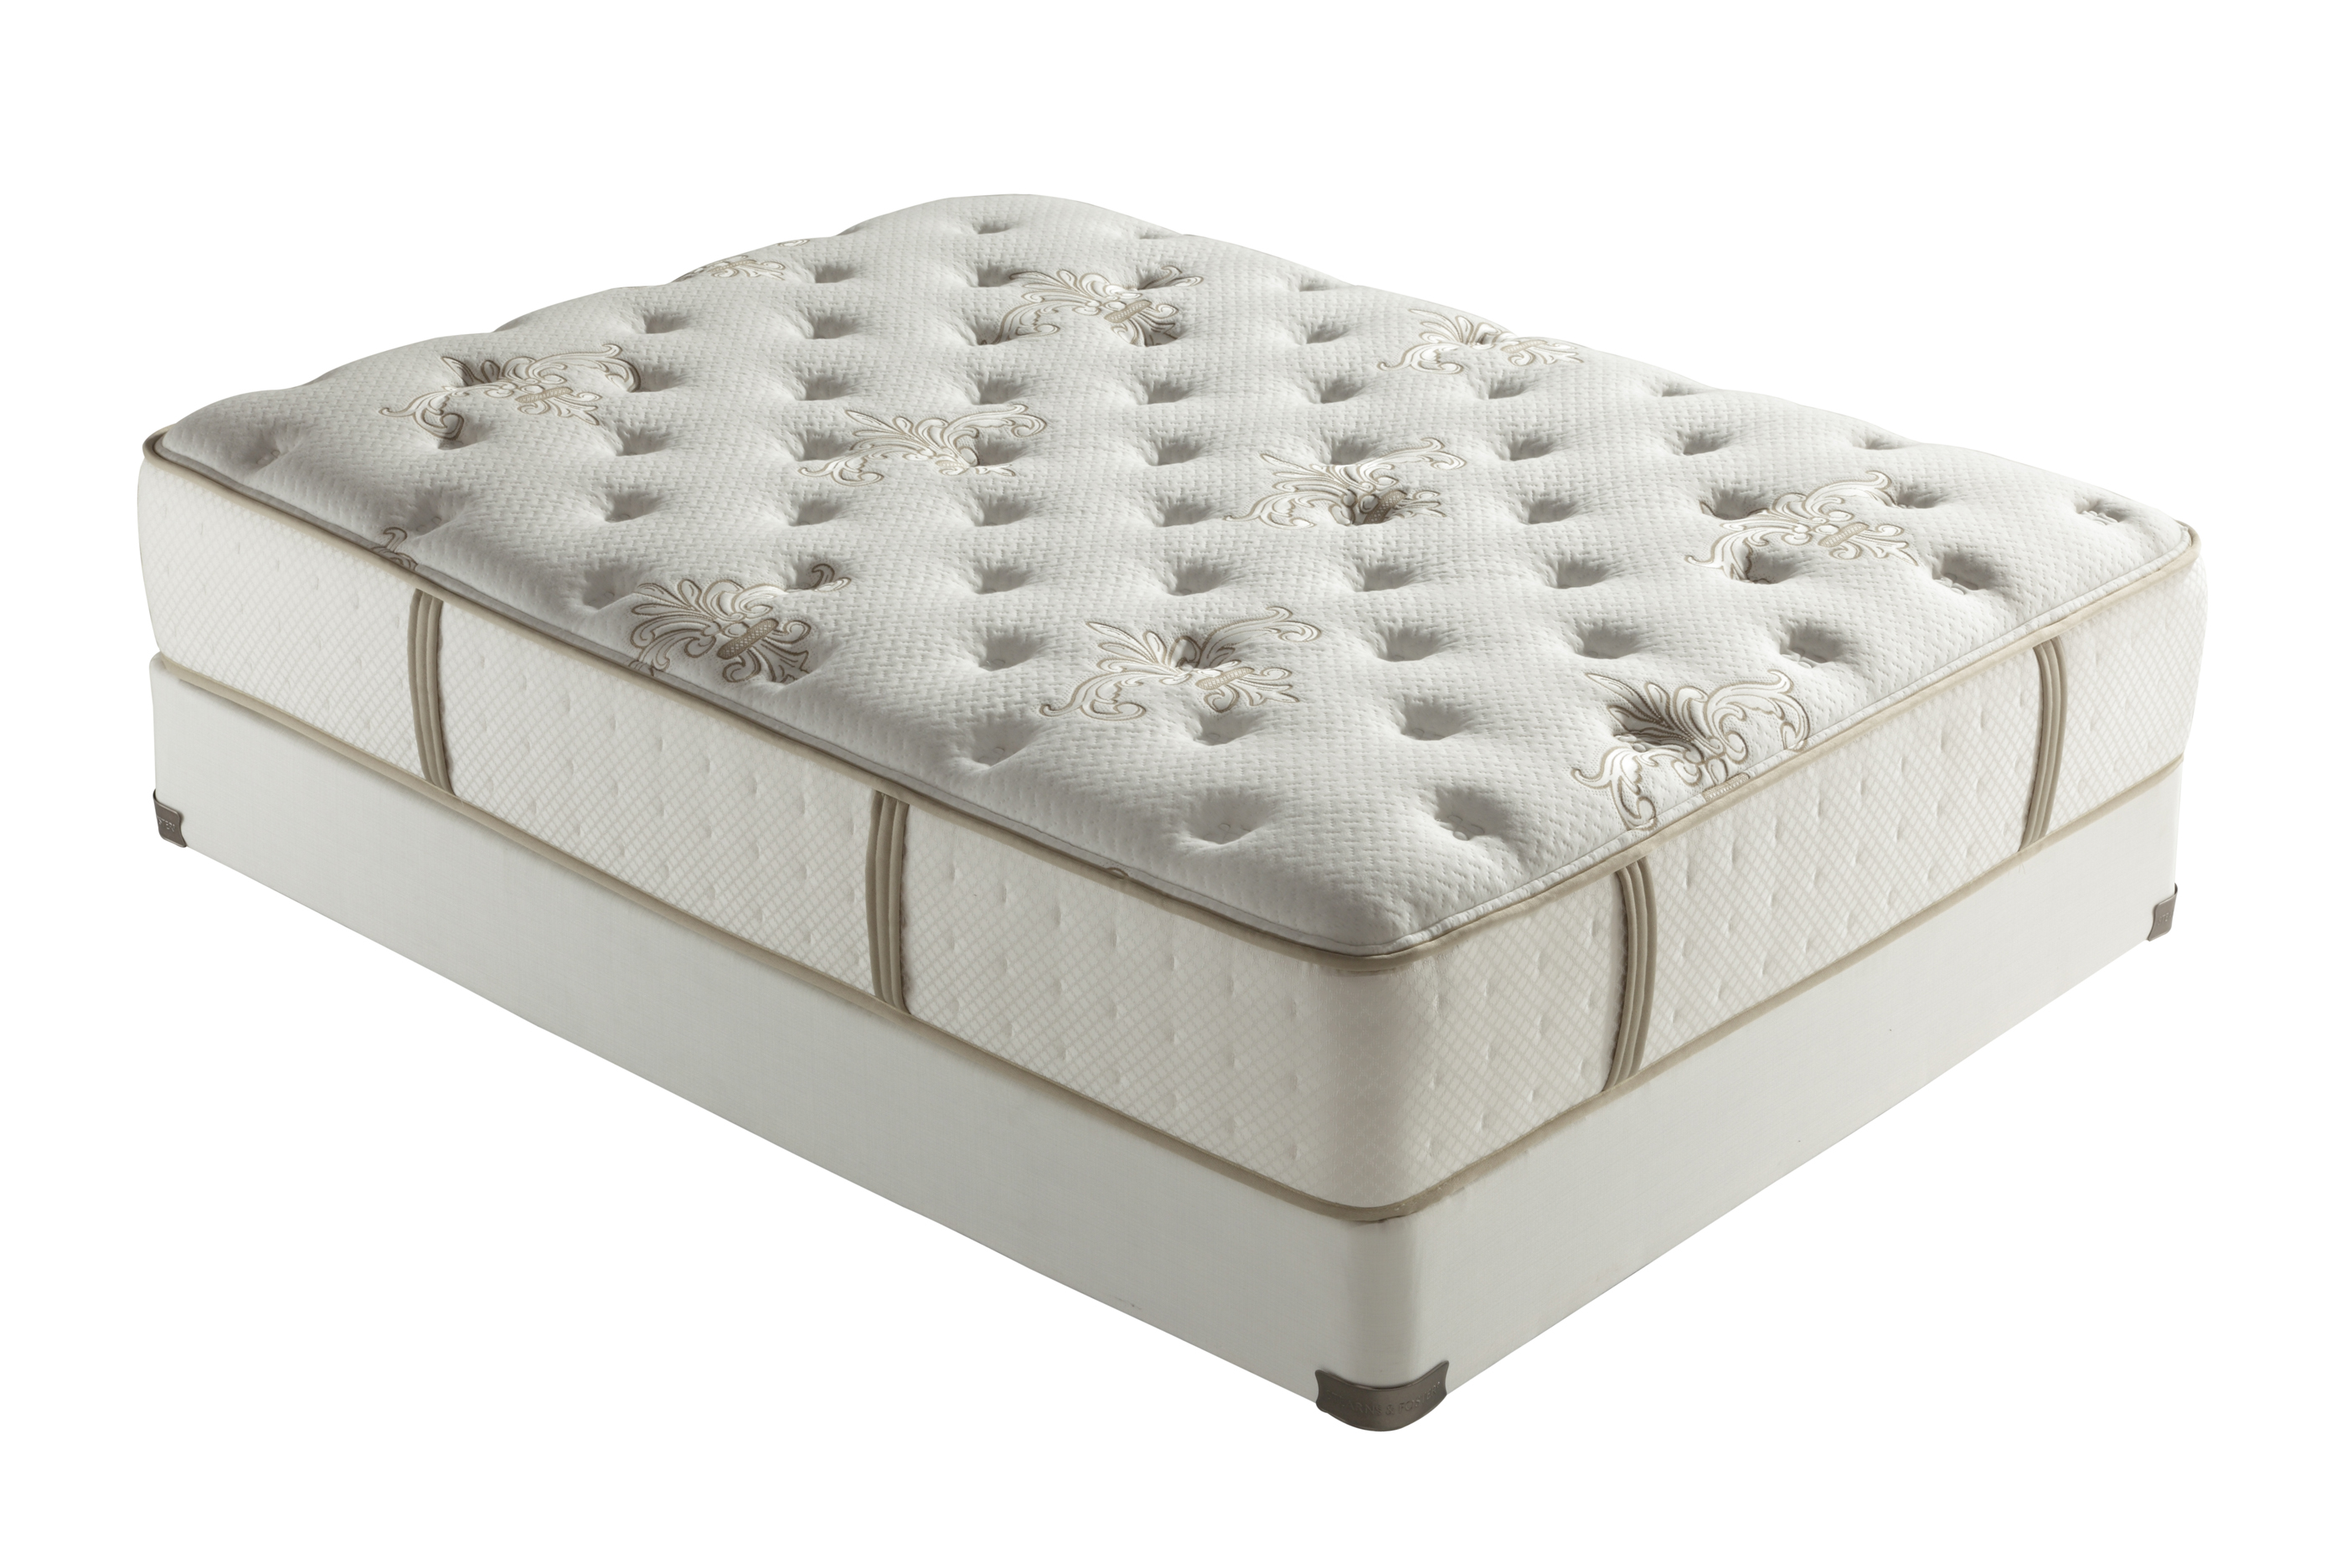 stearns & foster rockwell king luxury plush mattress